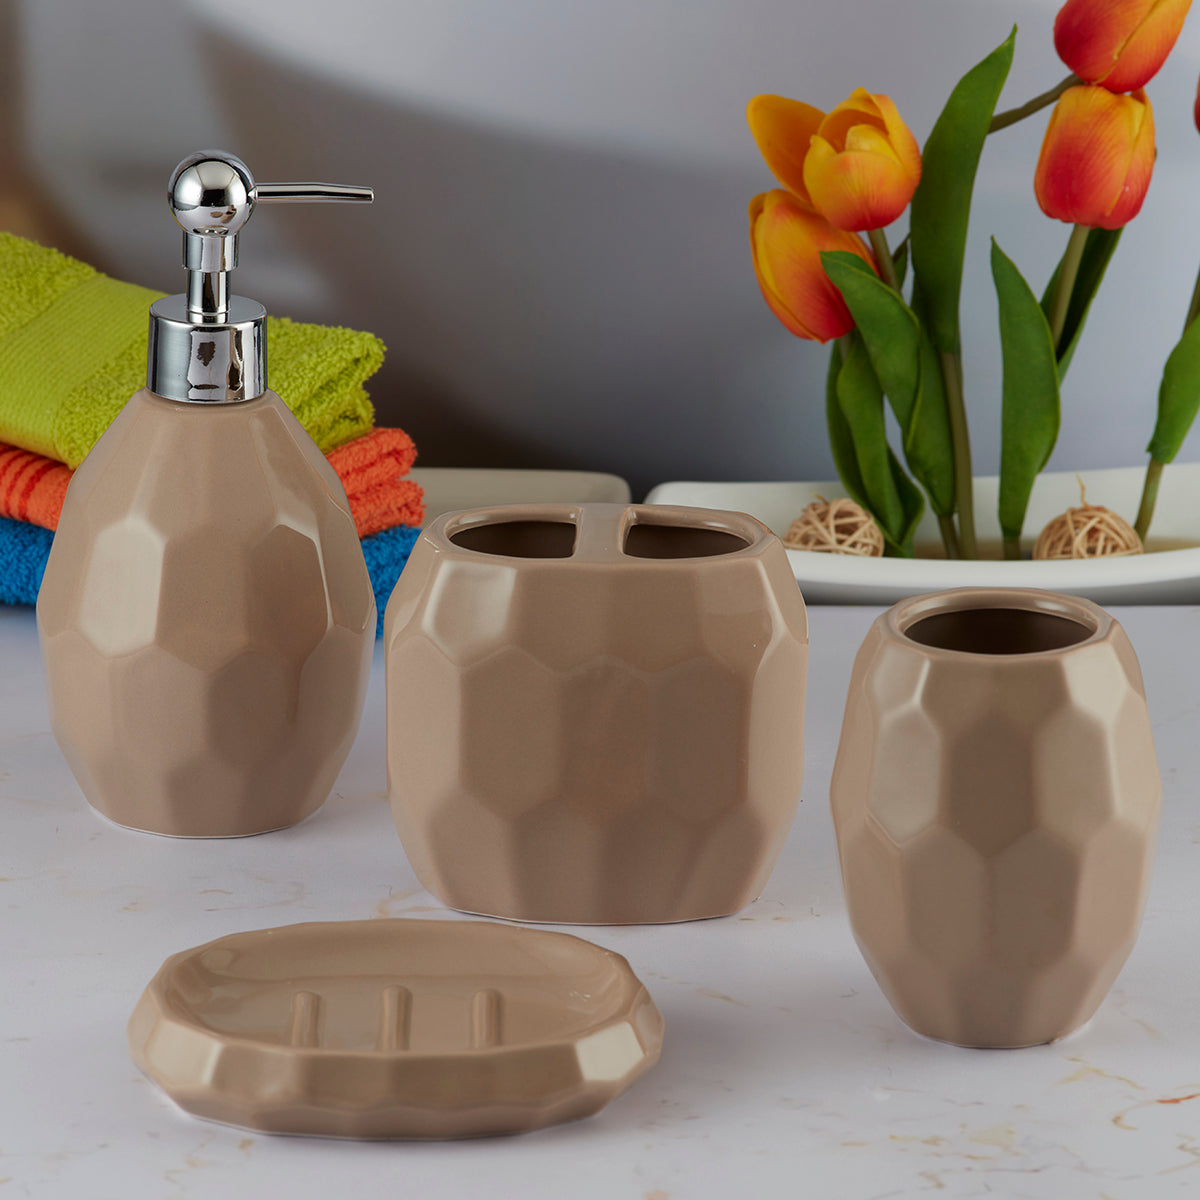 Ceramic Bathroom Accessories Set of 4 Bath Set with Soap Dispenser (8107)